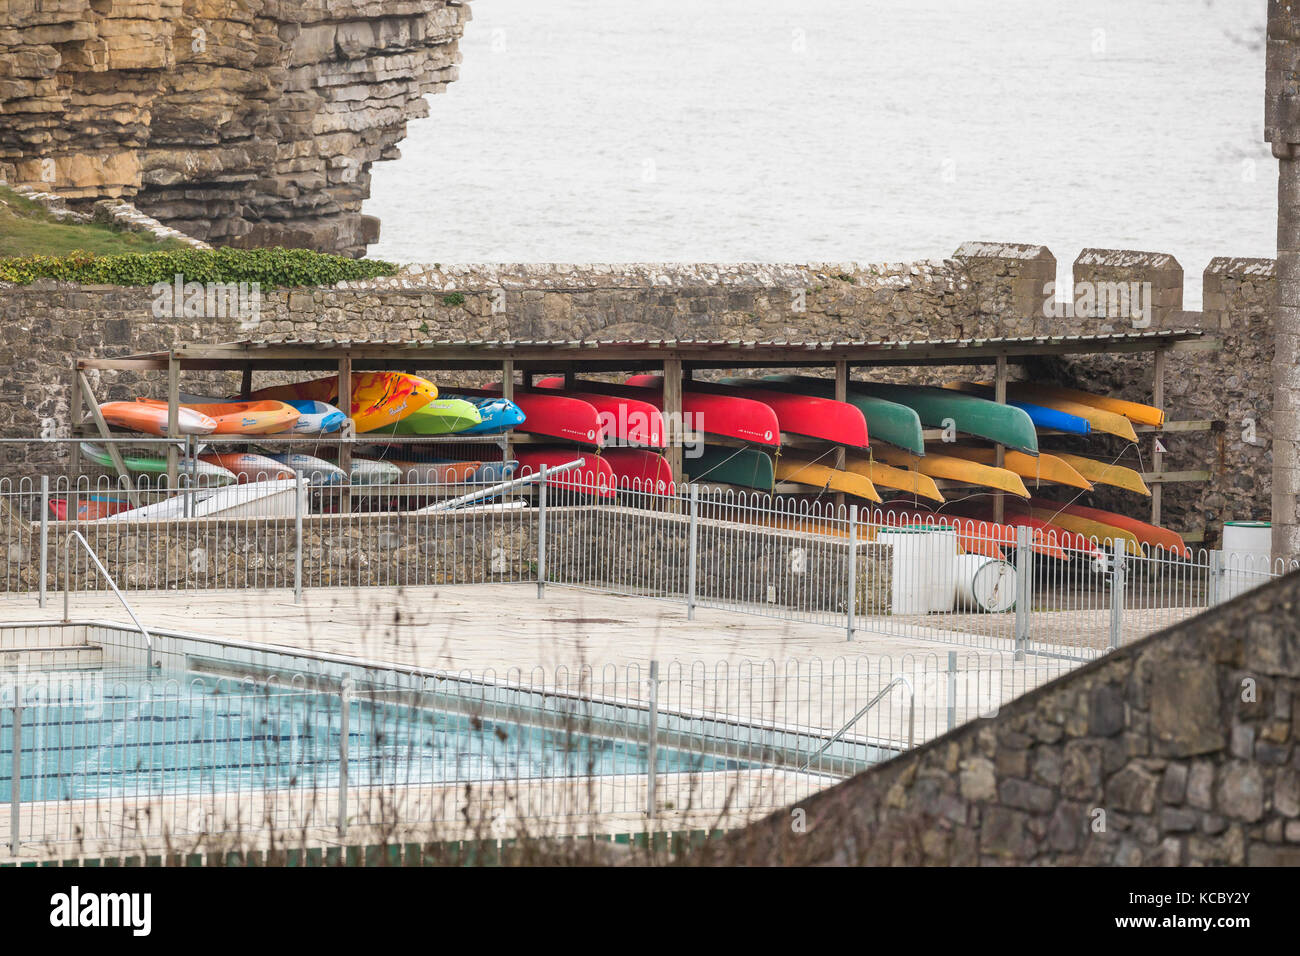 outdoor persuits kayak storage by coastal swimming pool Stock Photo